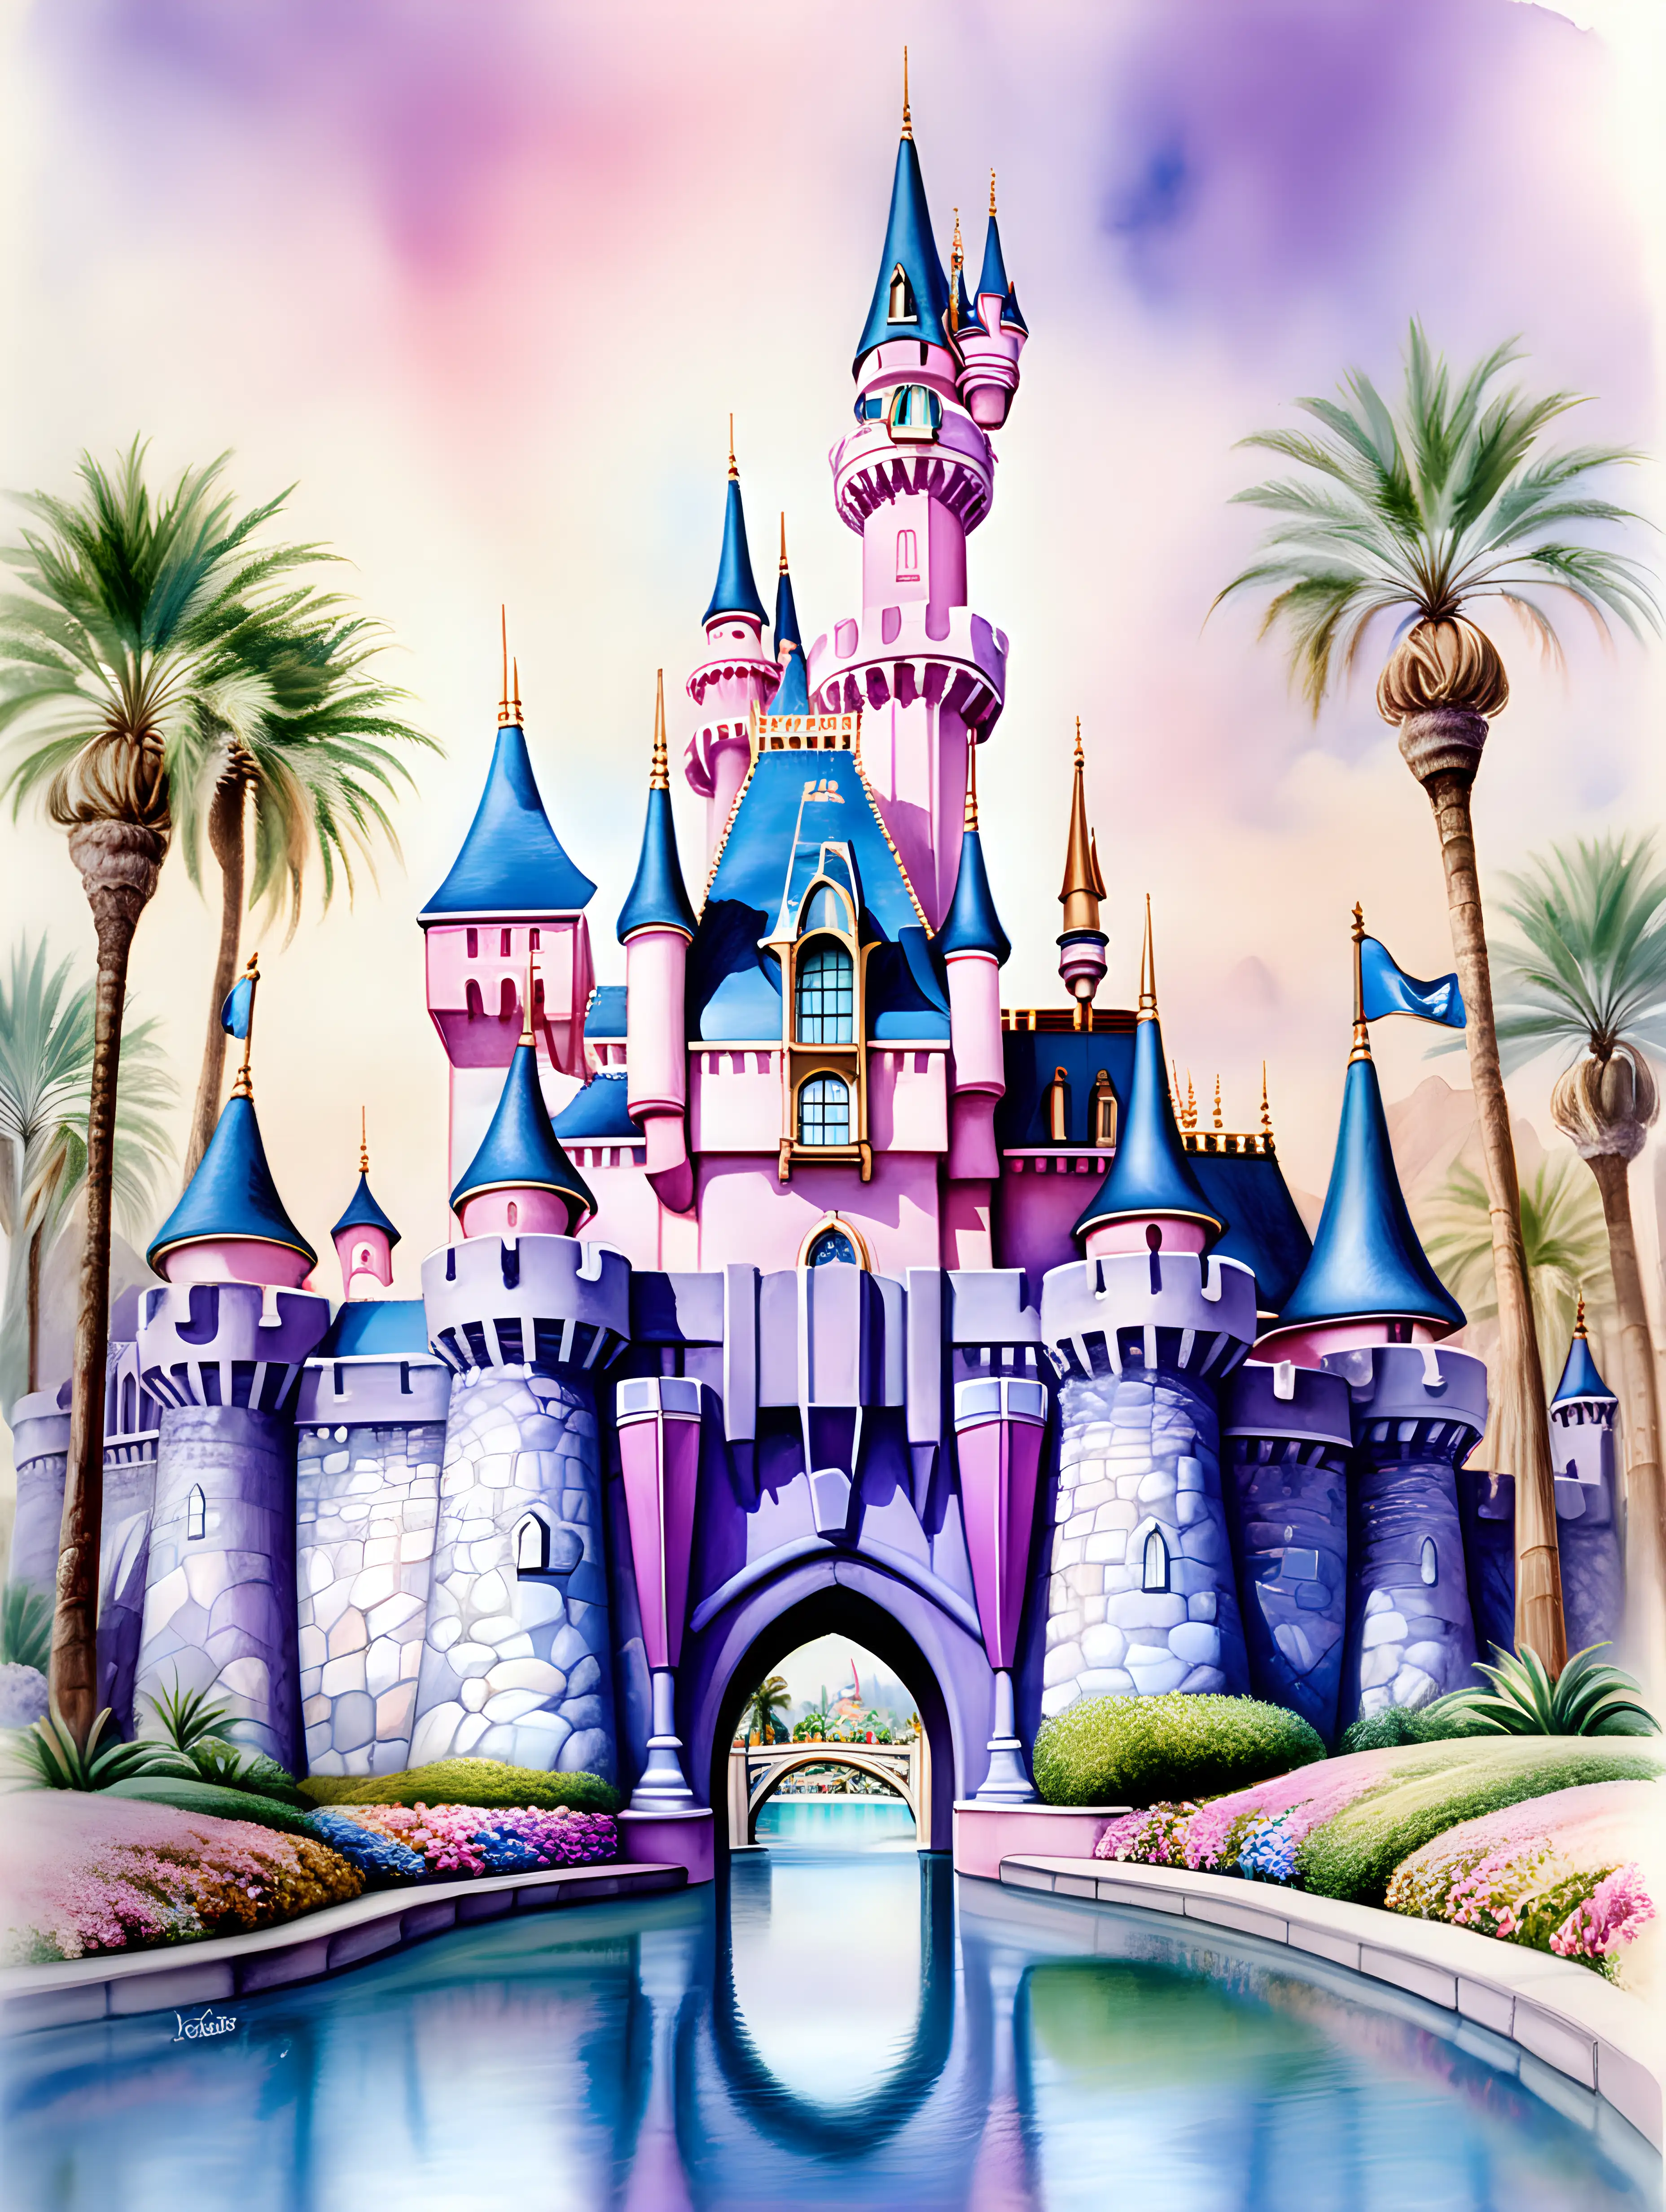 Enchanting Disneyland Sleeping Beauty Castle in Vibrant Watercolors